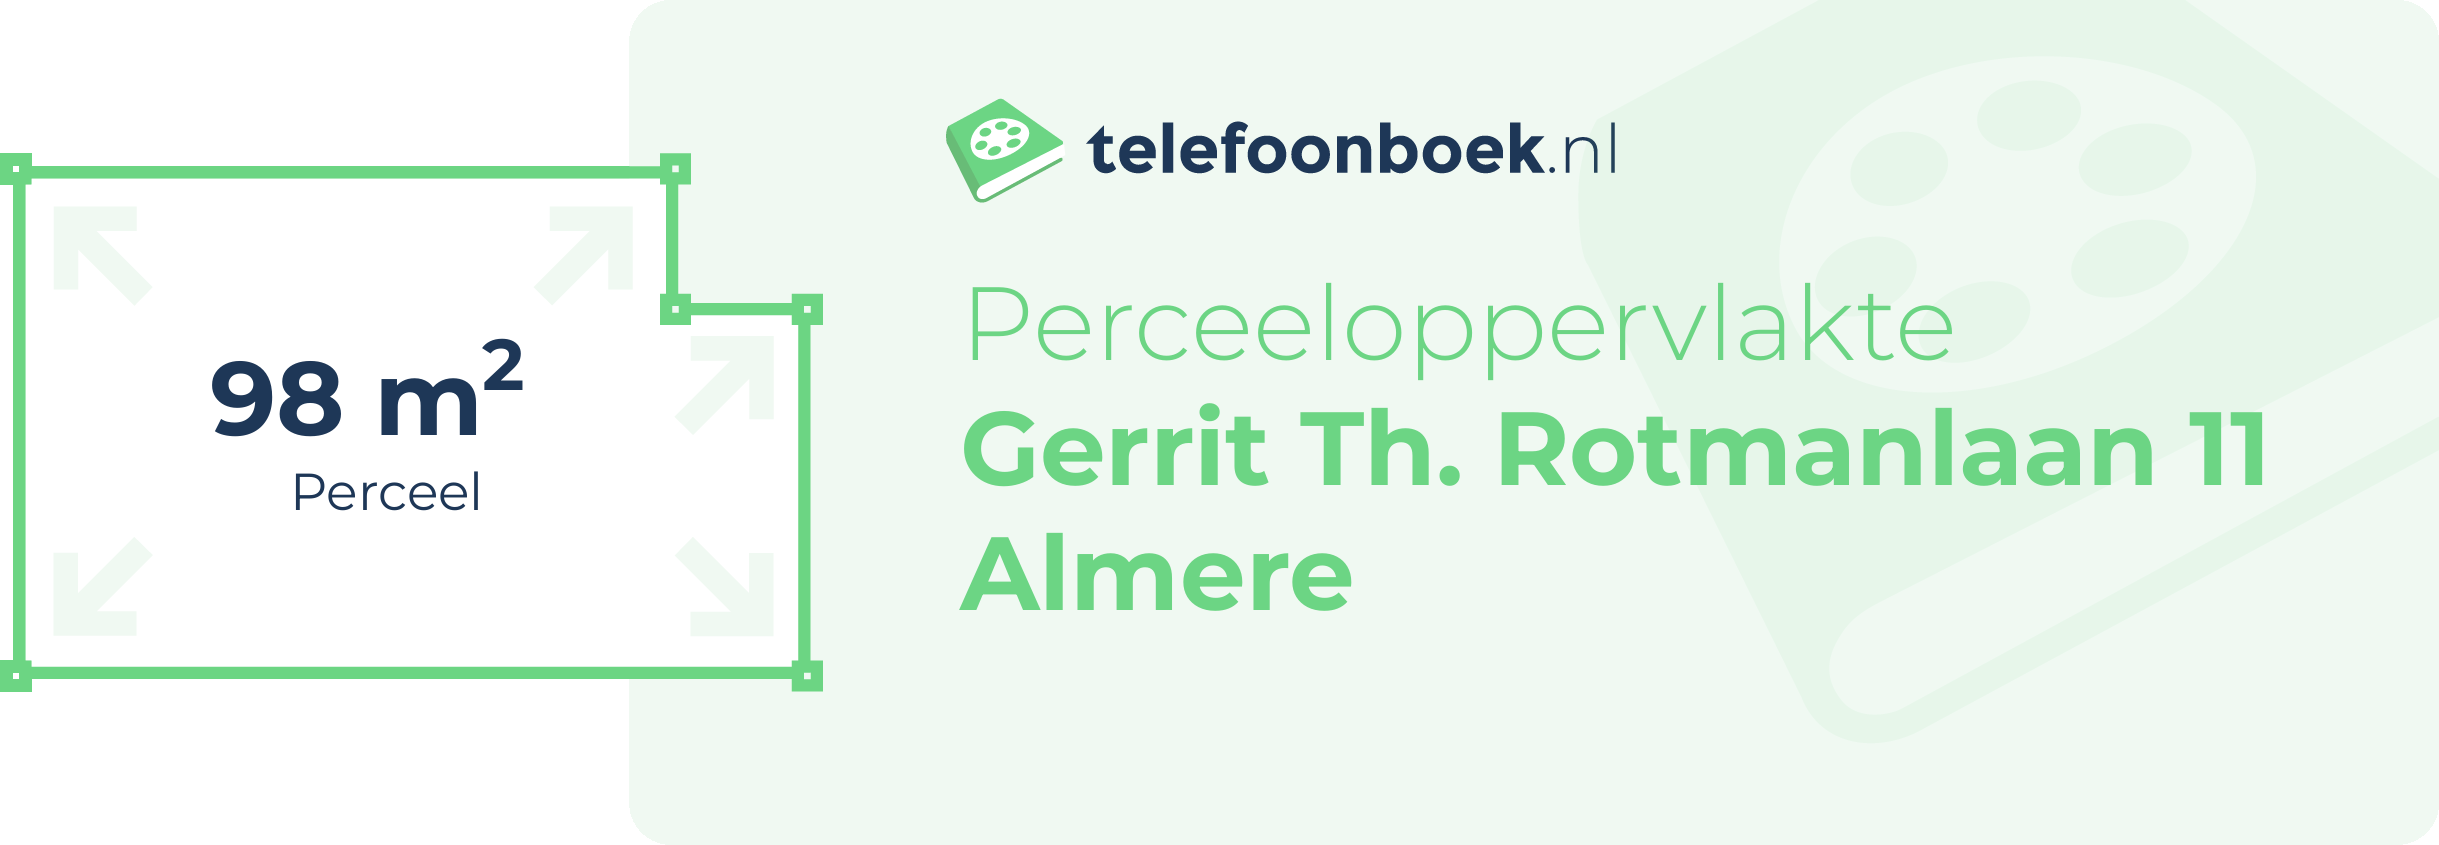 Perceeloppervlakte Gerrit Th. Rotmanlaan 11 Almere